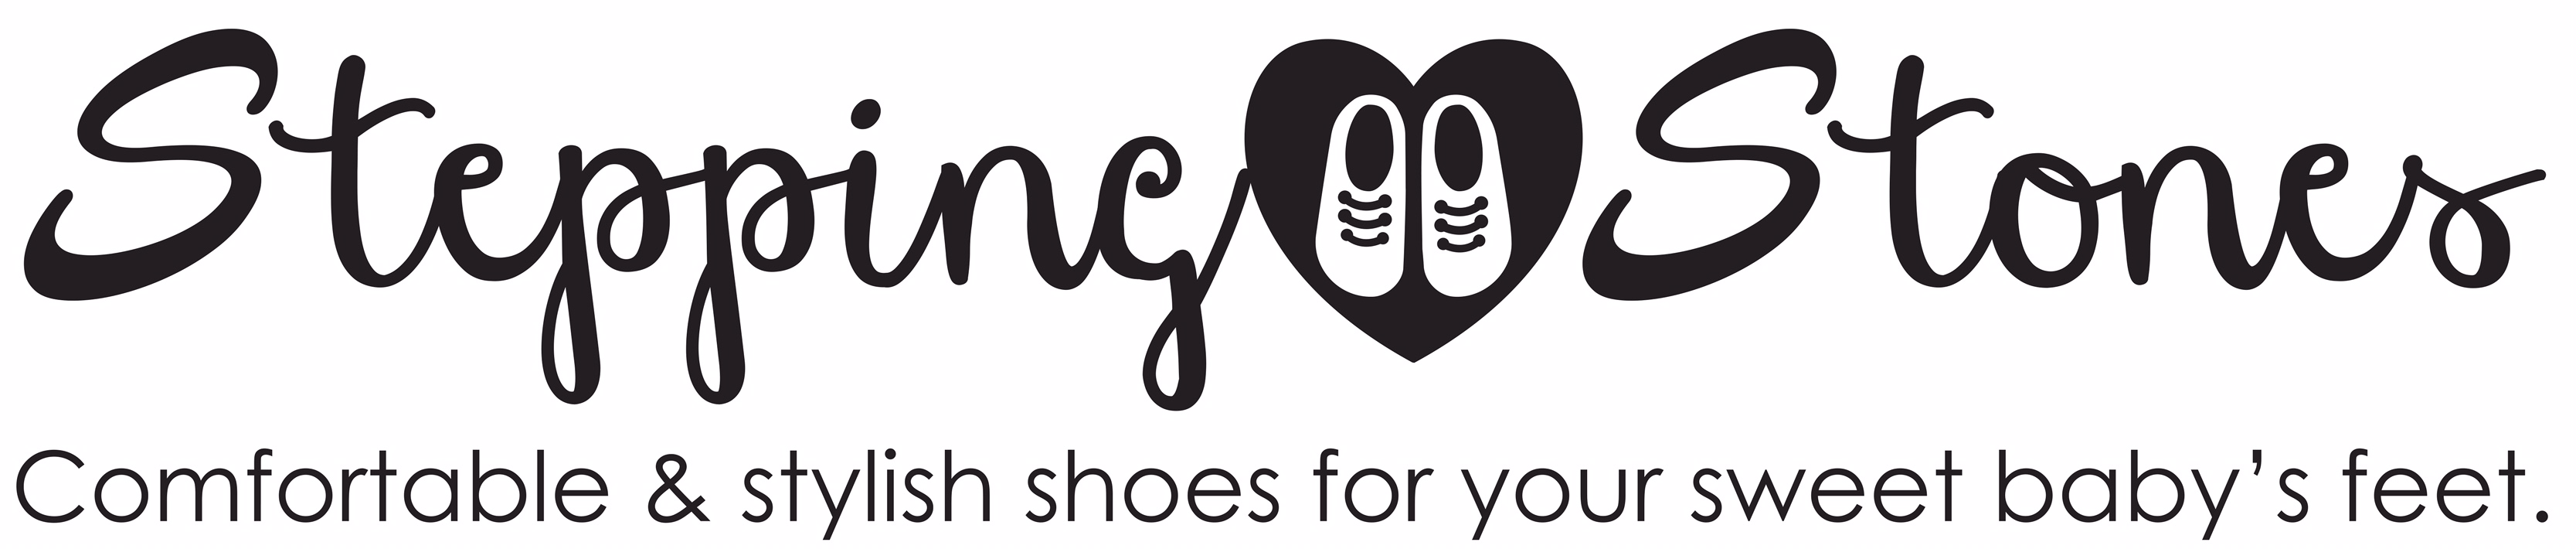 Stepping Stones's logo